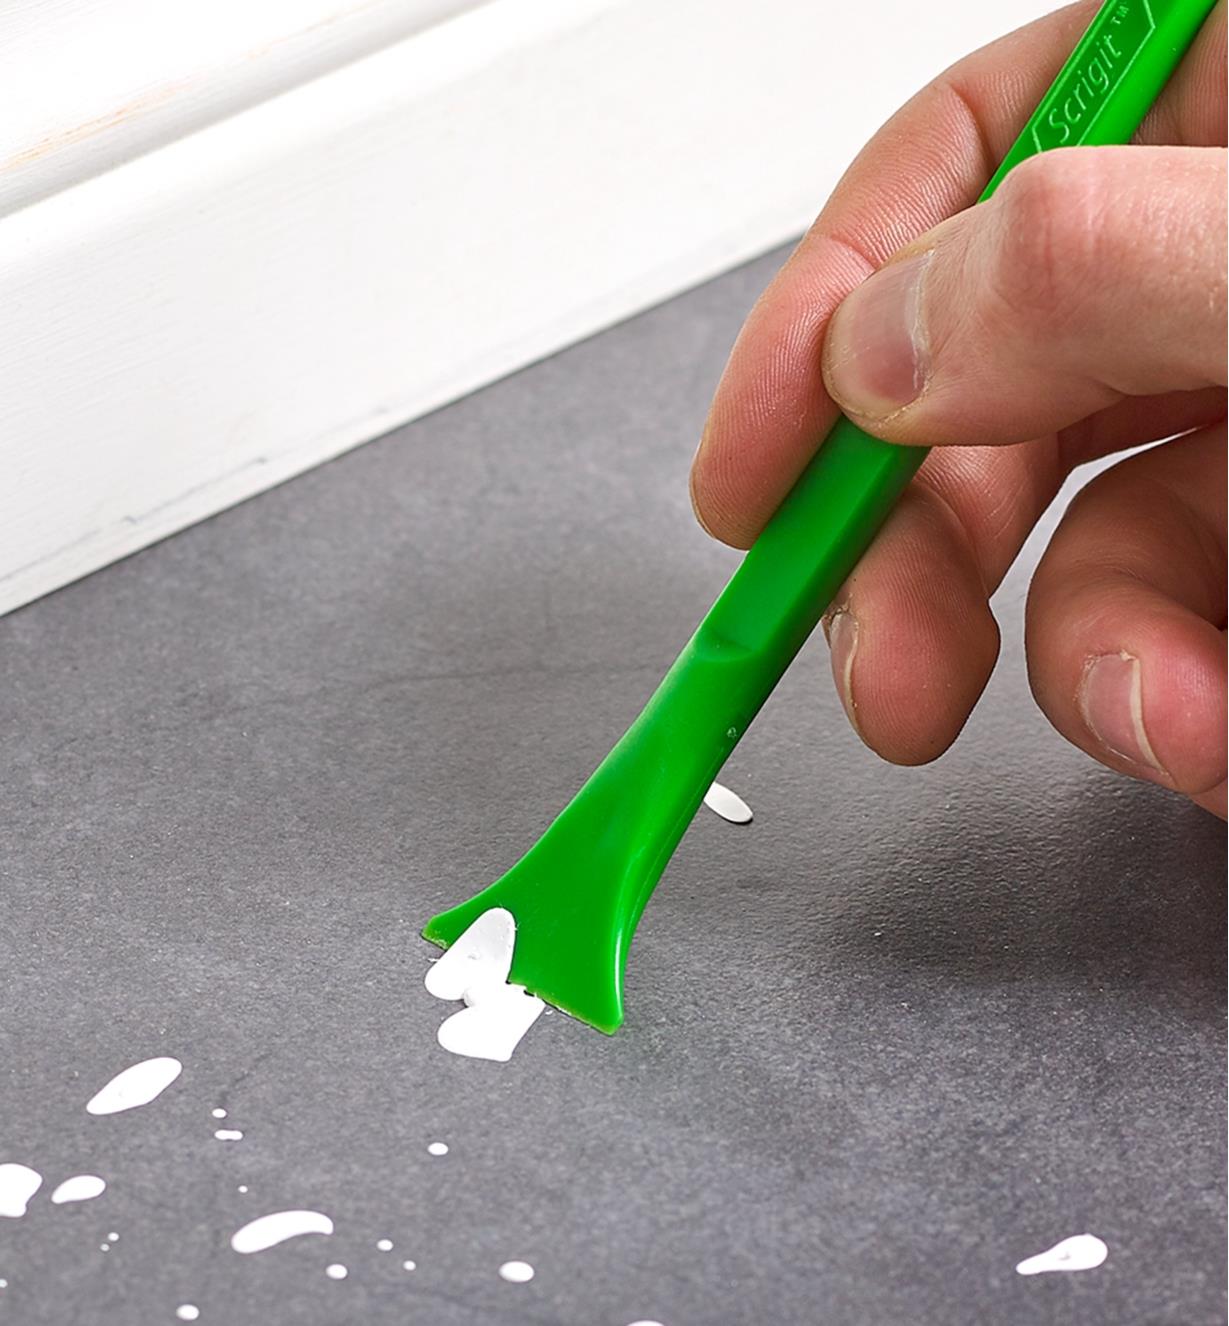 Scraping paint specks from flooring using the wide-blade Scrigit scraper